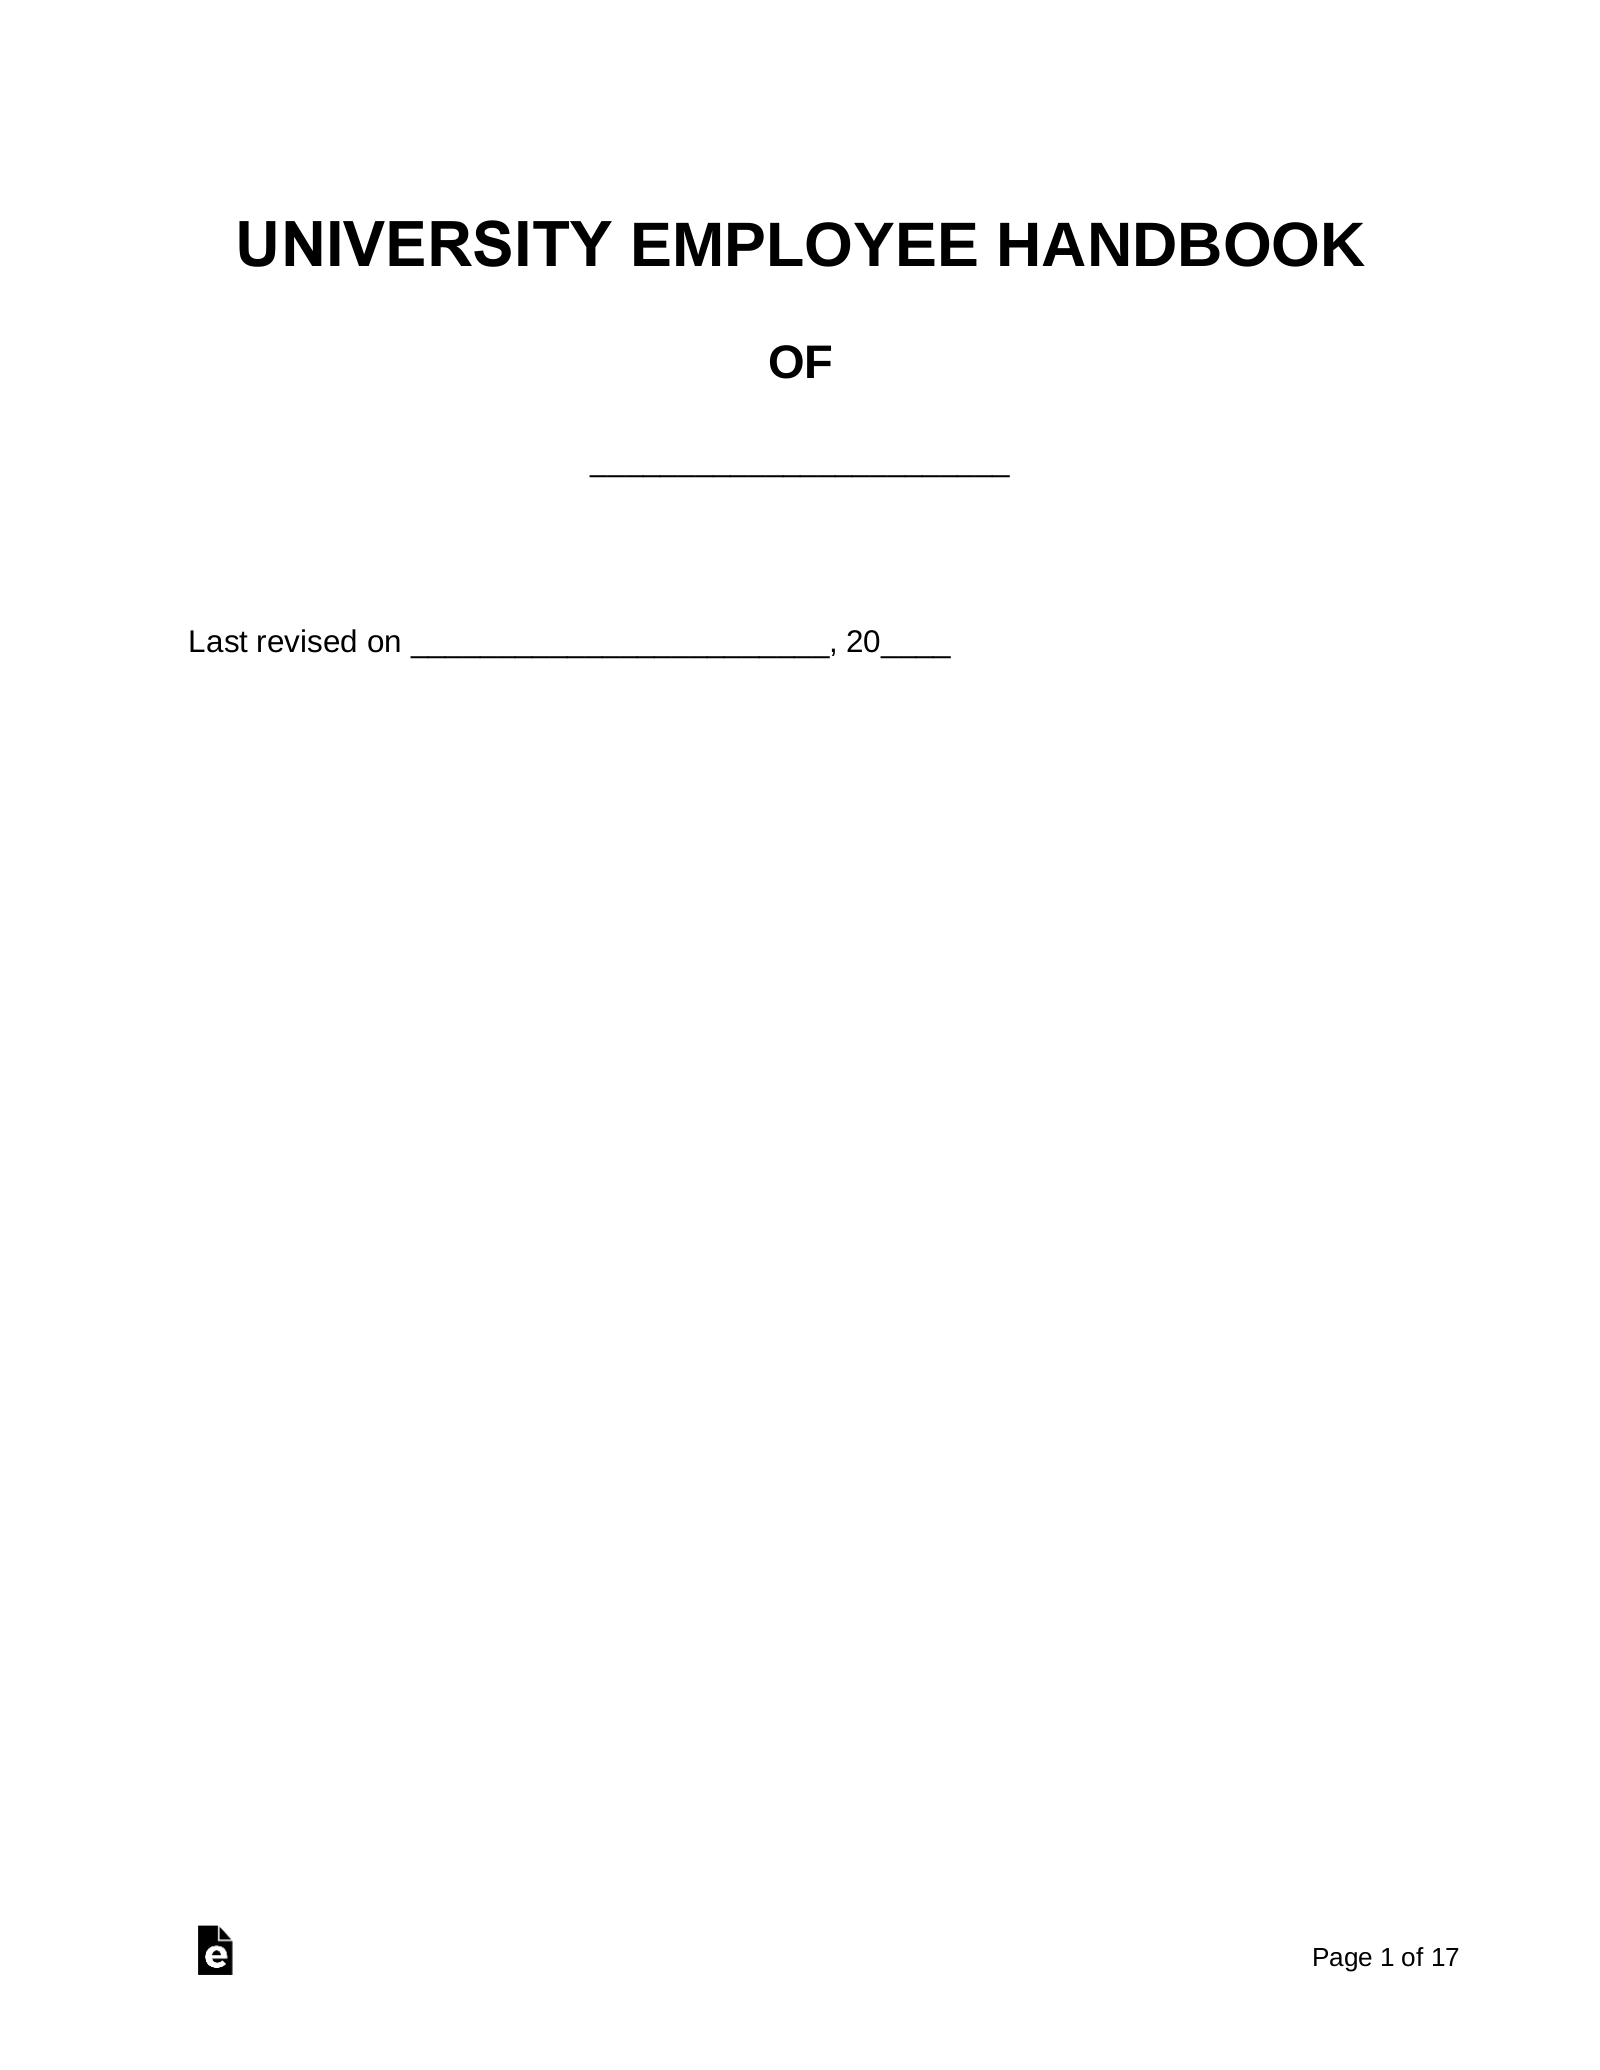 University Employee Handbook